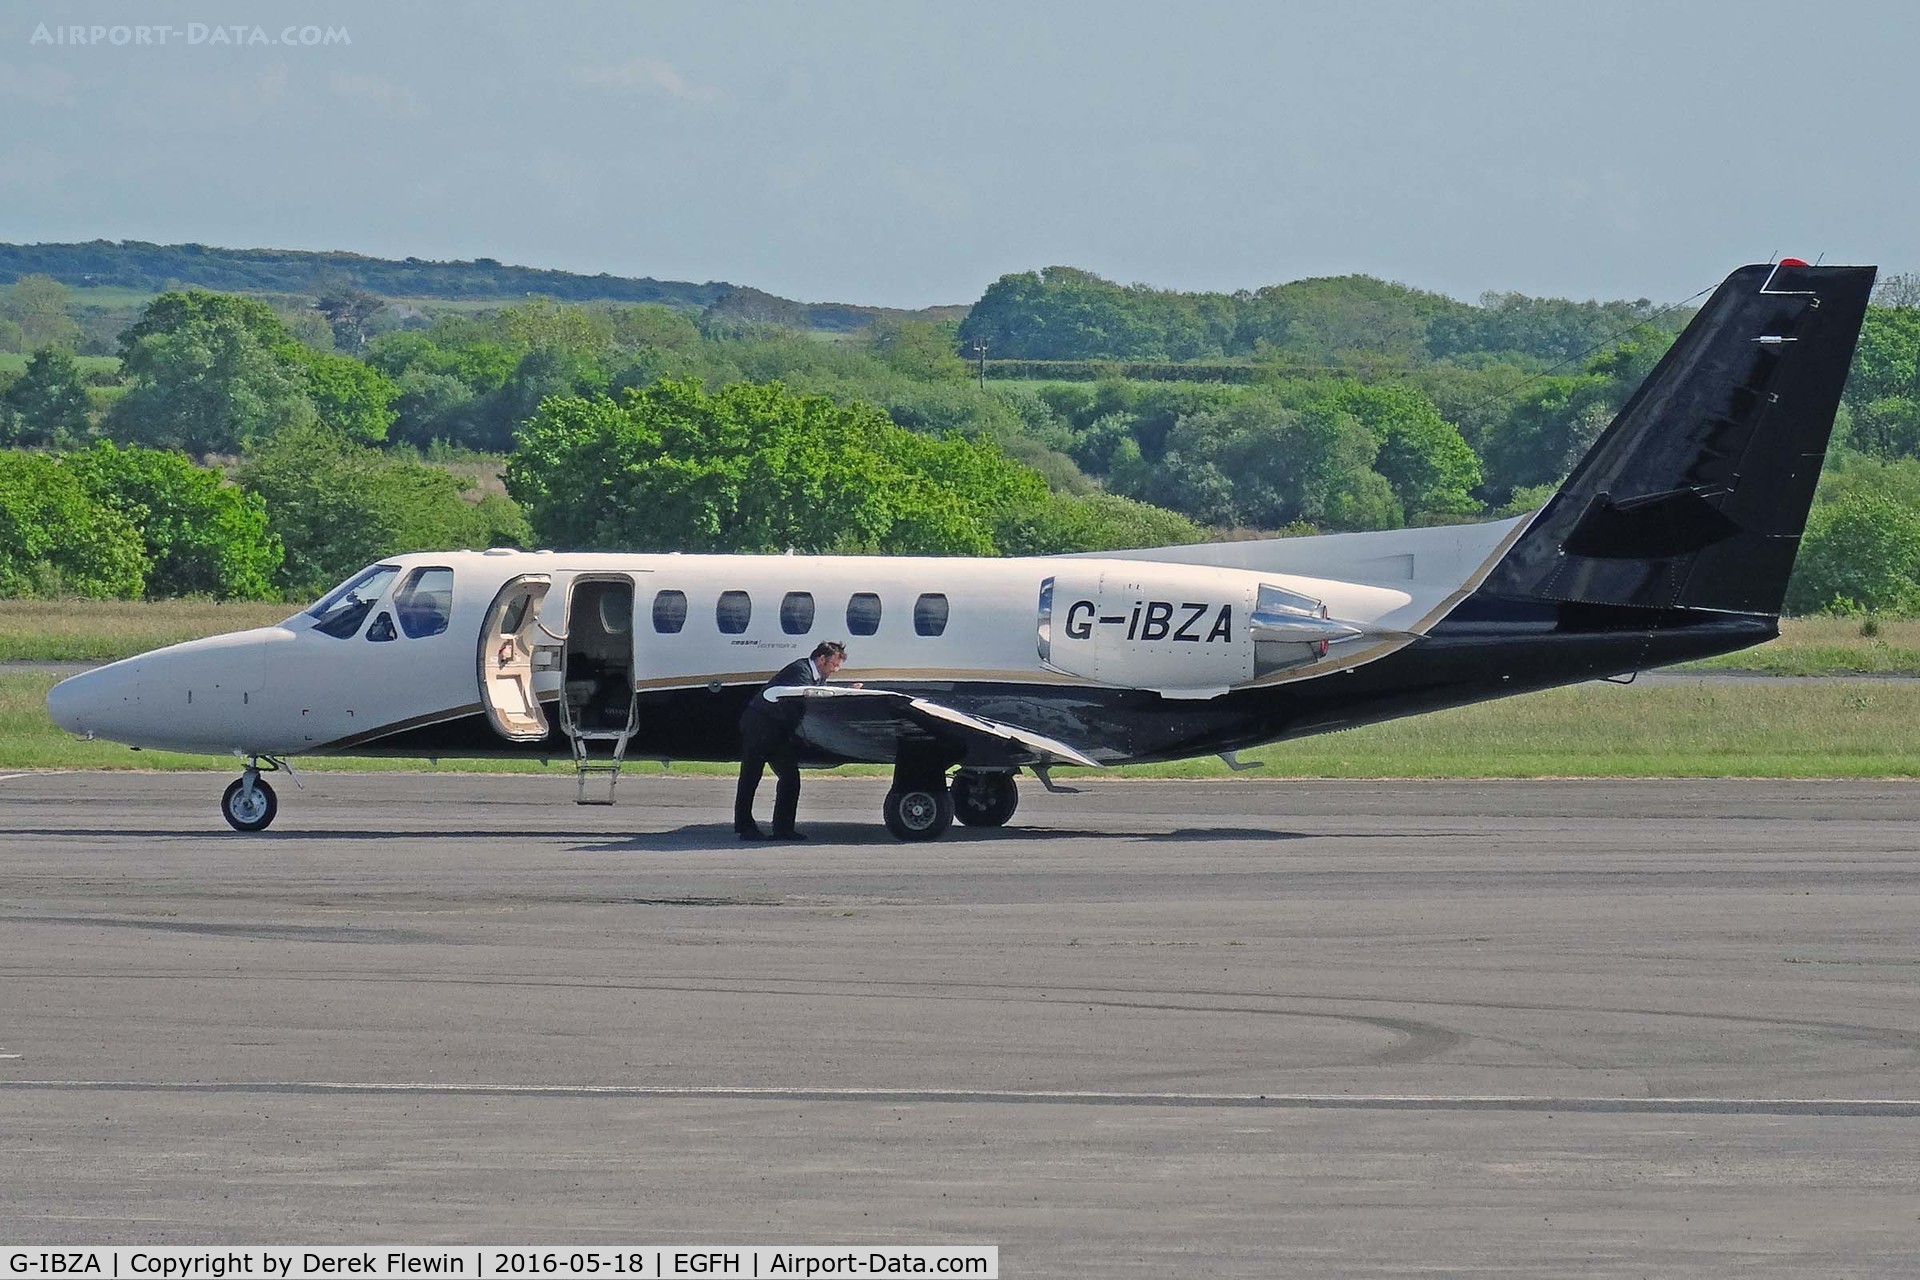 G-IBZA, 1991 Cessna 550 Citation II C/N 550-0672, Citation II, Flexflight Biggin Hill based, previously N6763C, PT-OMB, N550PF, G-OTIS, OY-VIS, SE-RHP, seen parked up after dropping off passengers.